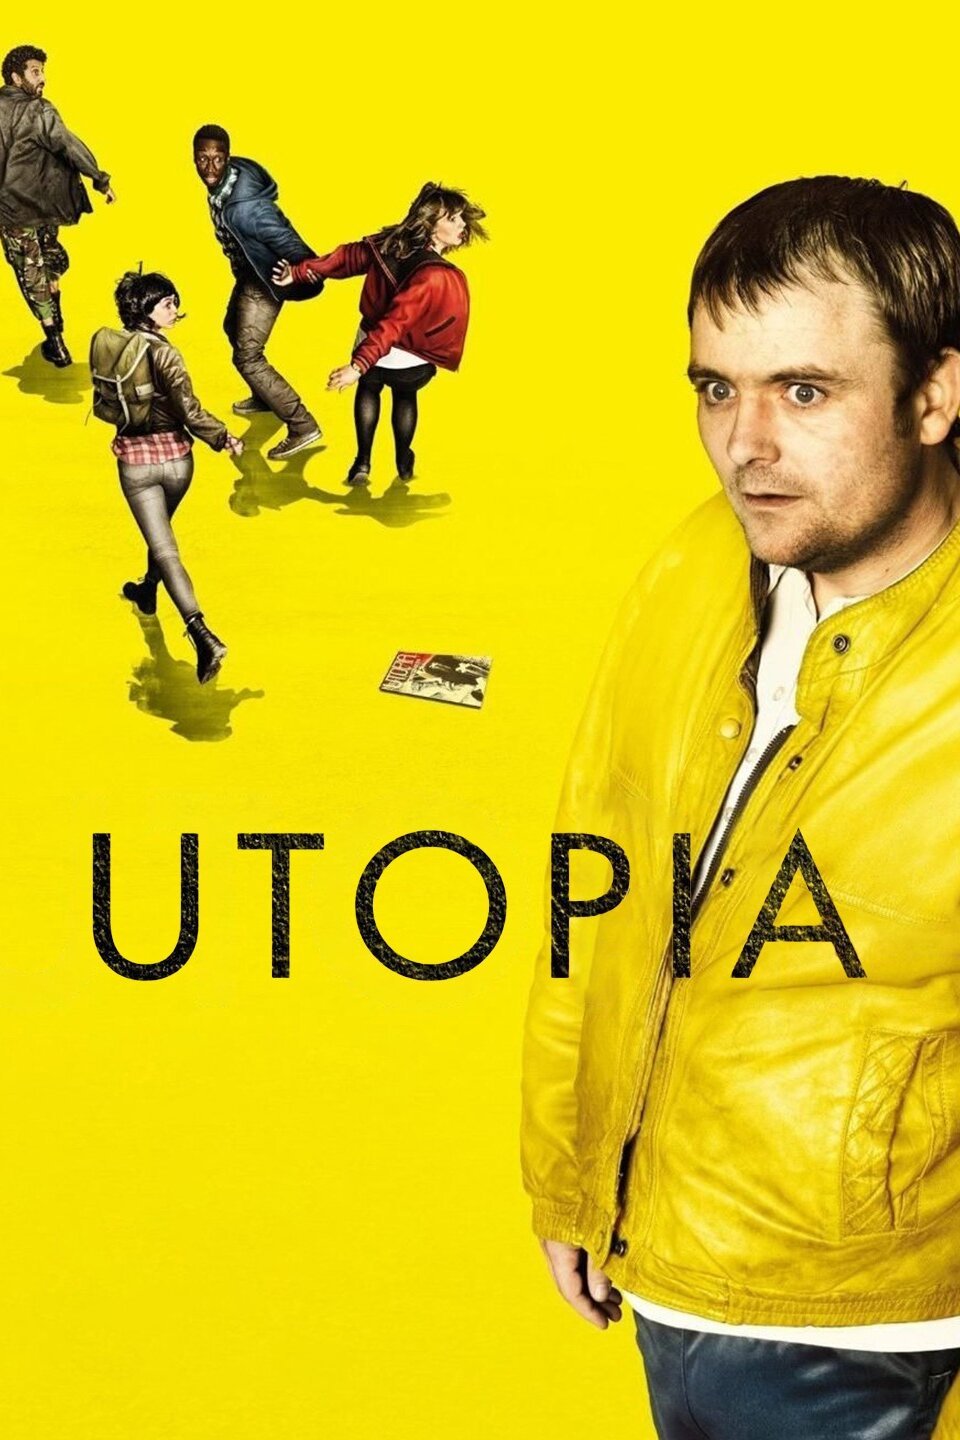 Utopia 2020 Poster Wallpapers